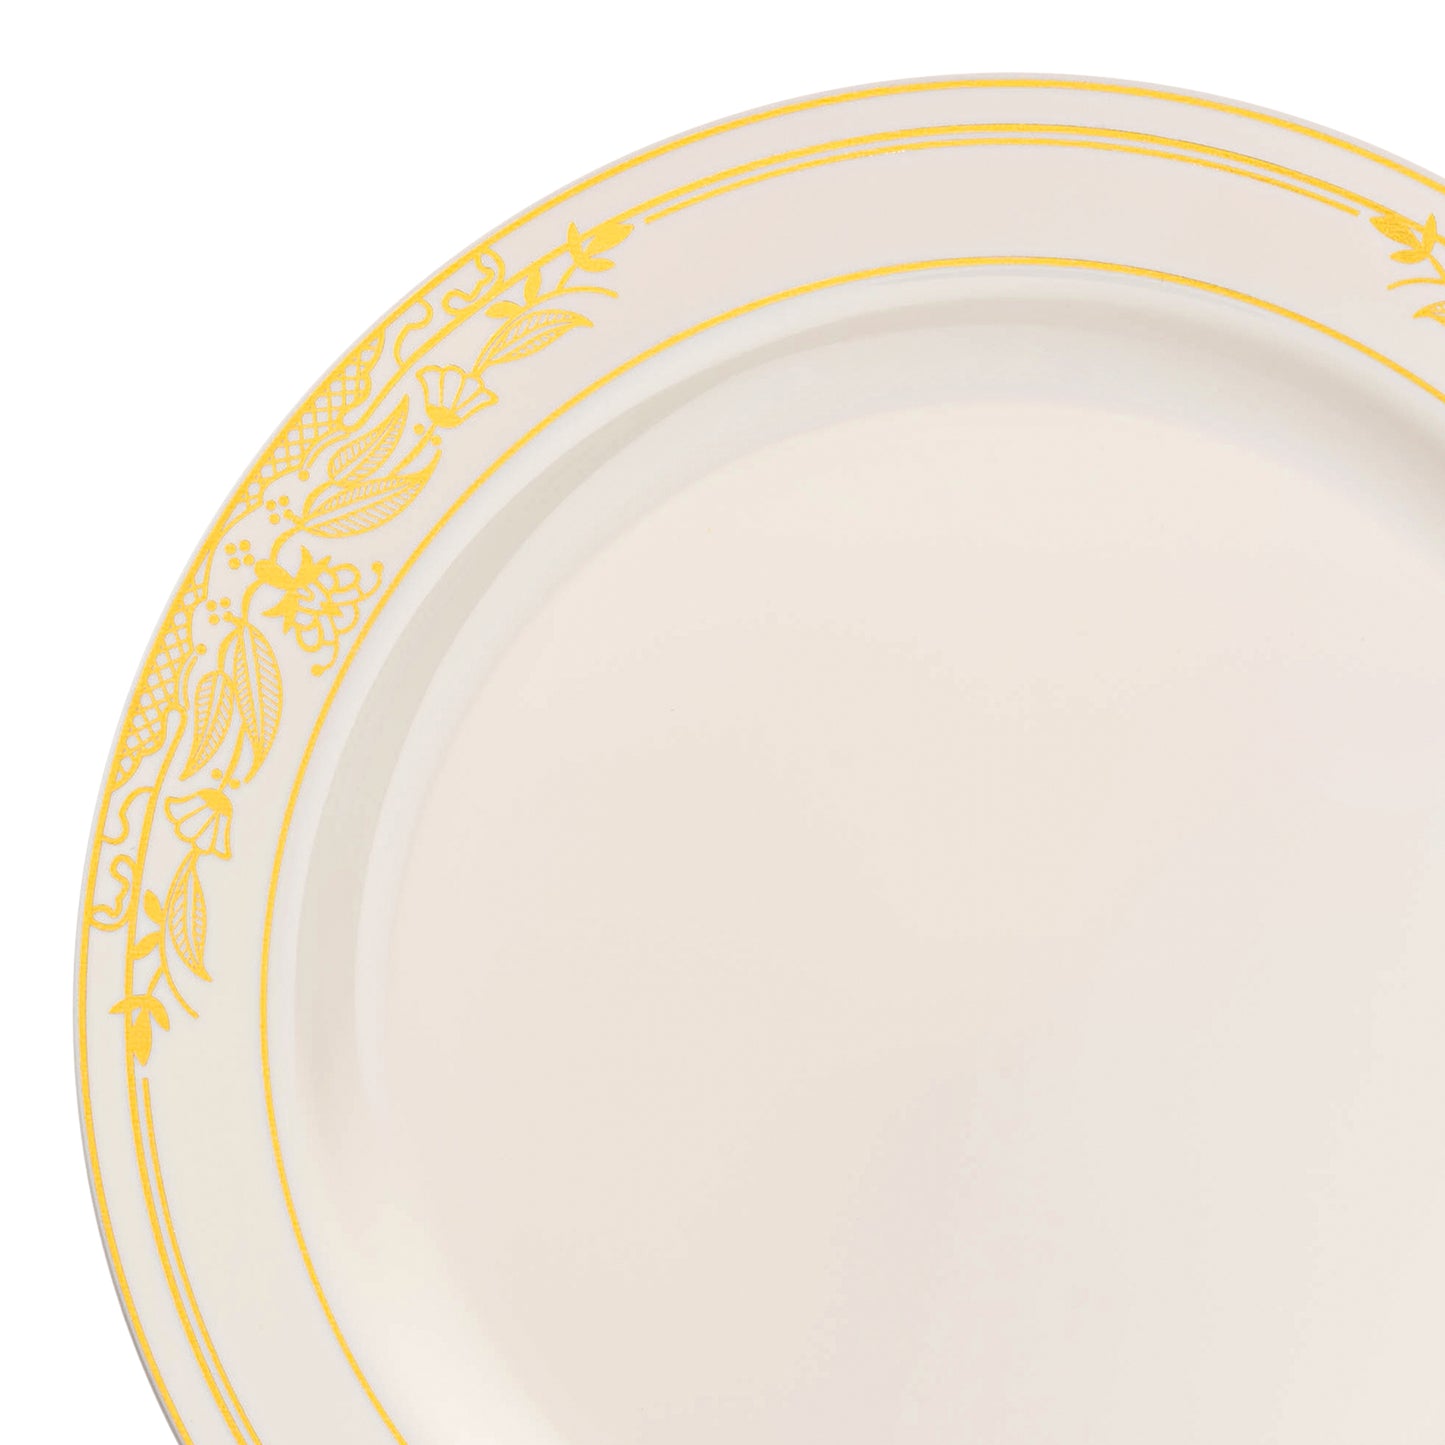 Ivory with Gold Harmony Rim Plastic Salad Plates (7.5") | The Kaya Collection